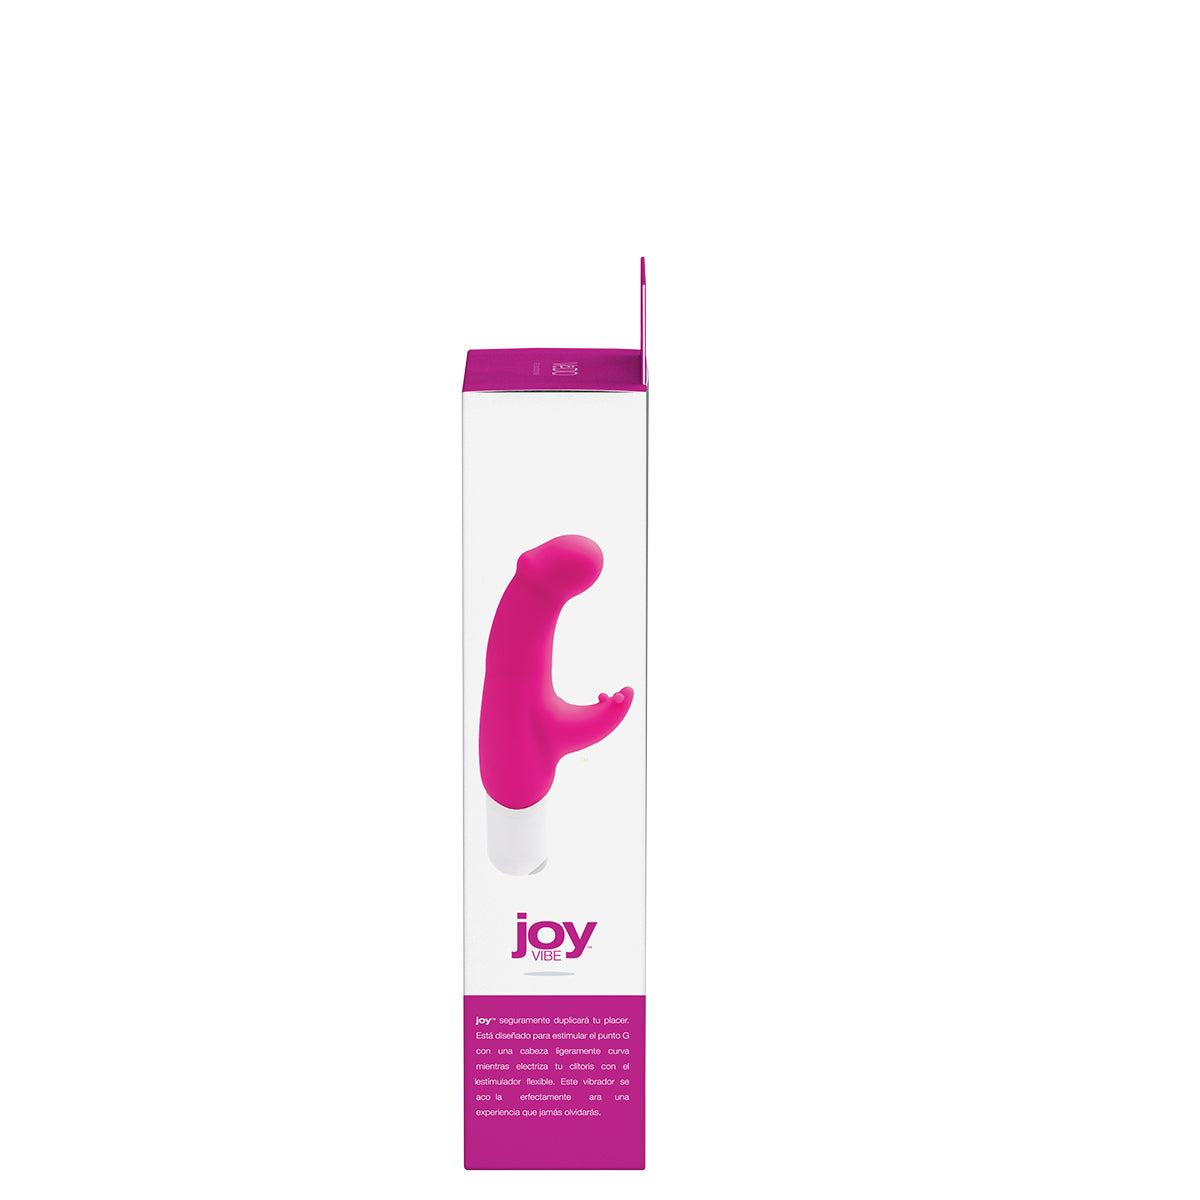 VeDO Joy Vibe - Hot Pink Intimates Adult Boutique